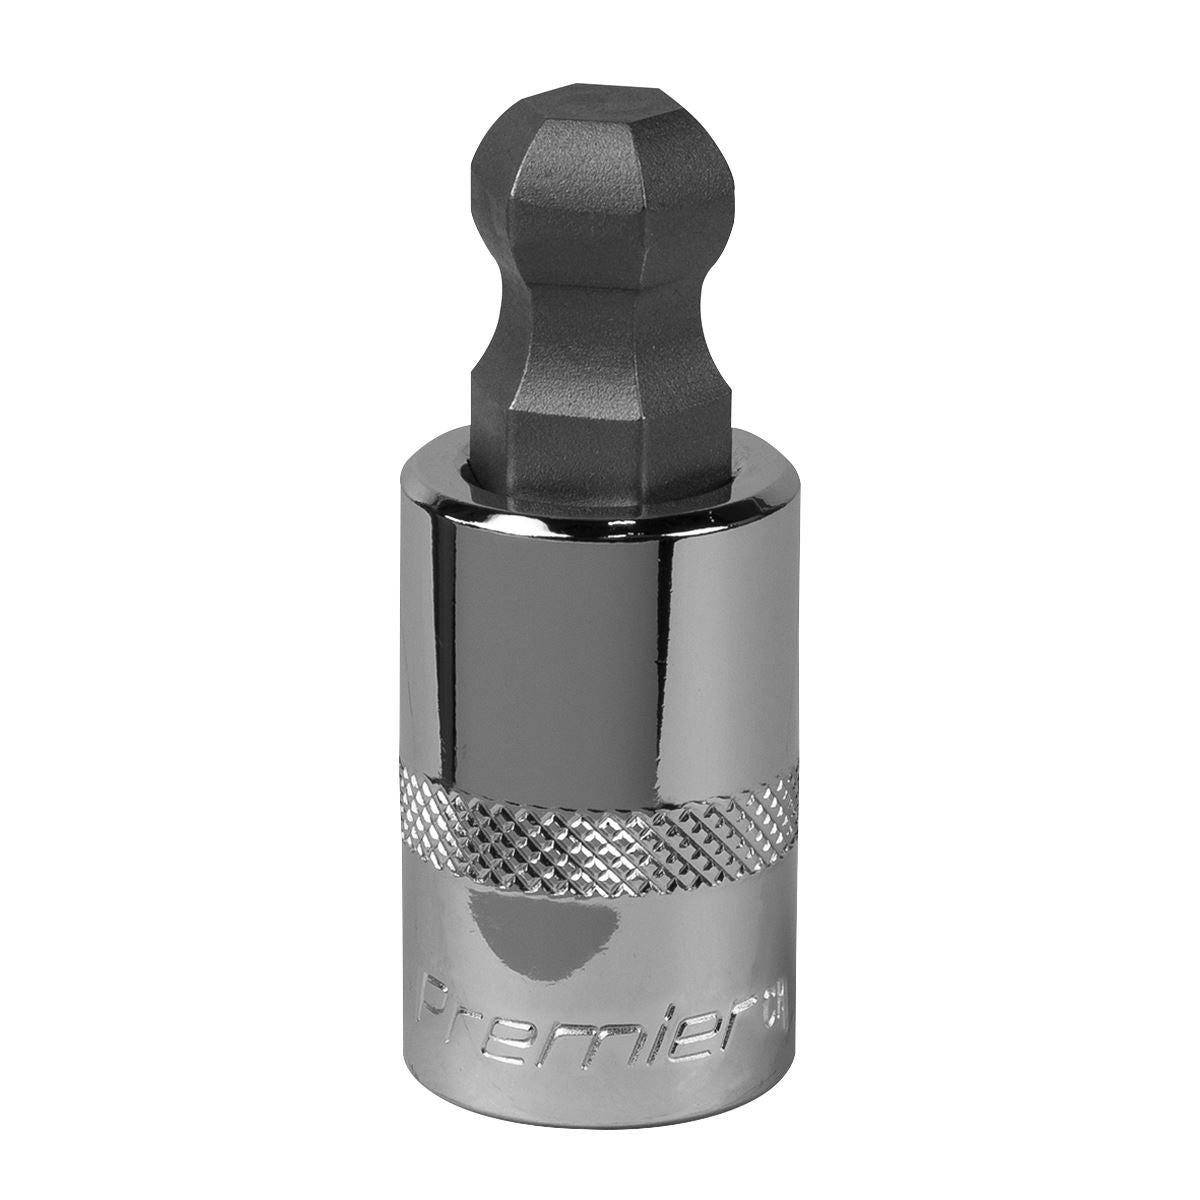 Sealey Premier Ball-End Hex Socket Bit 14mm 1/2"Sq Drive